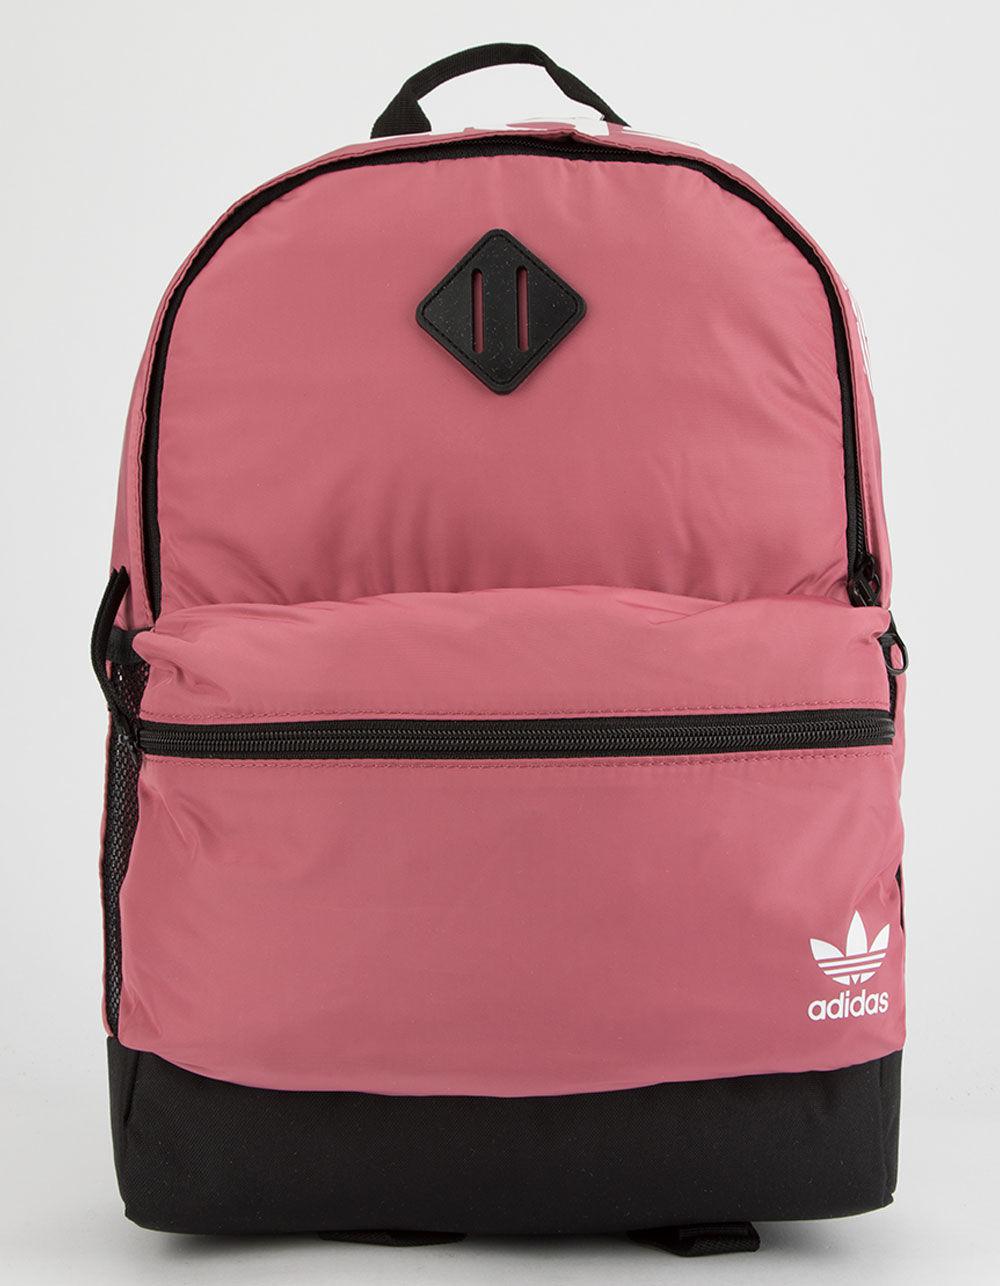 adidas originals pink backpack